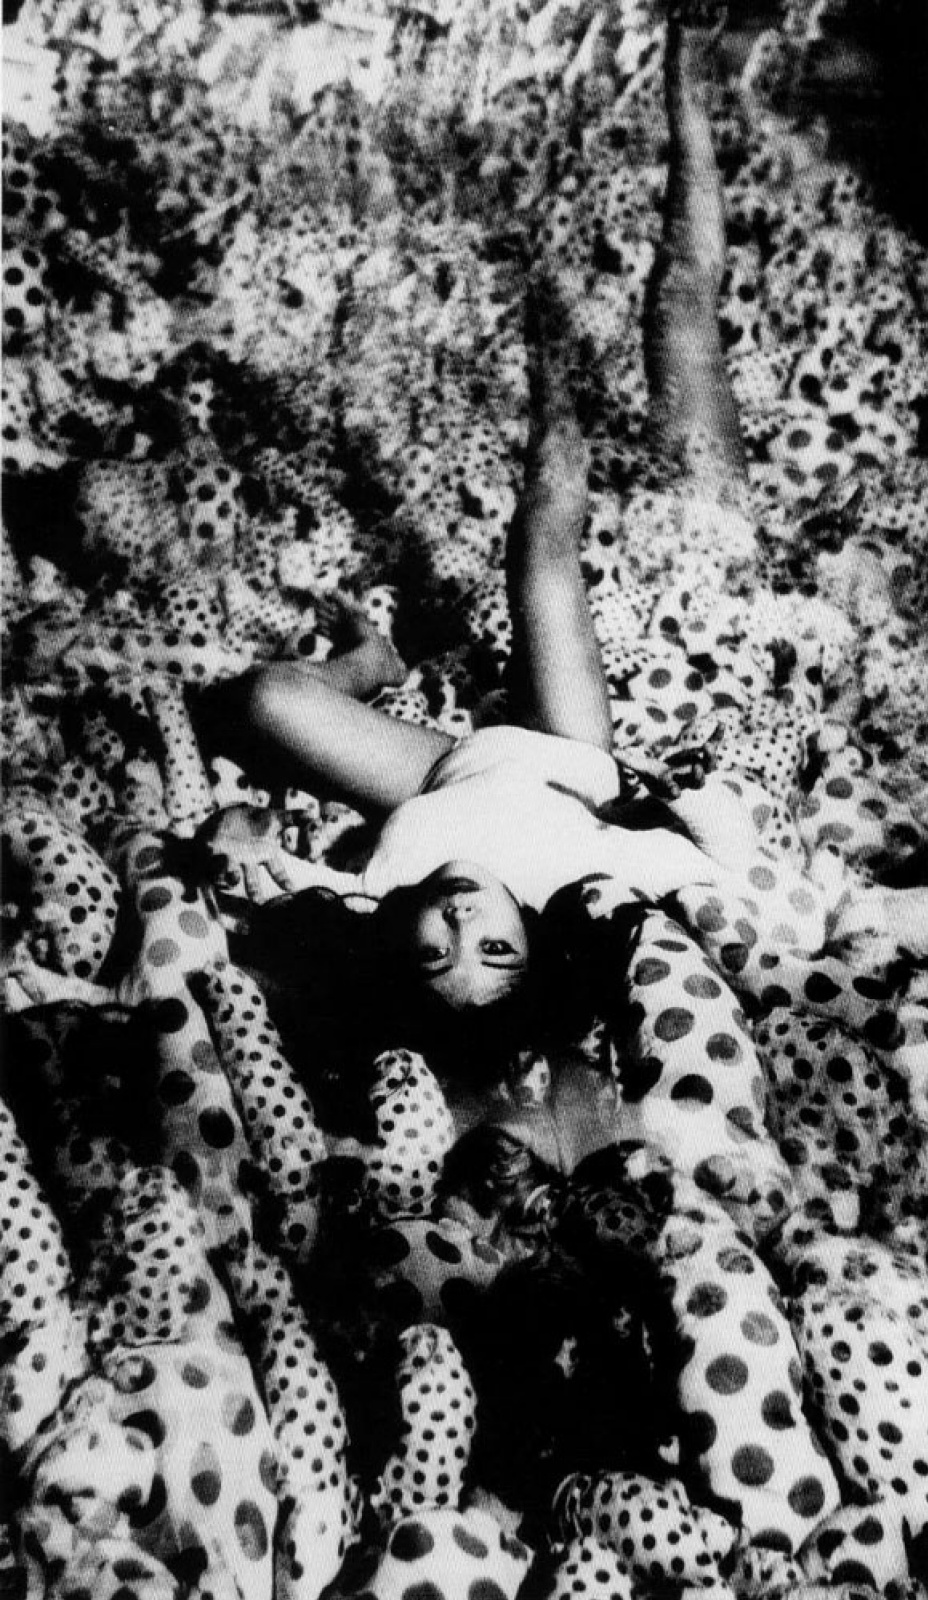 Abnormal sexual desire, art and Yayoi Kusama's polka dots